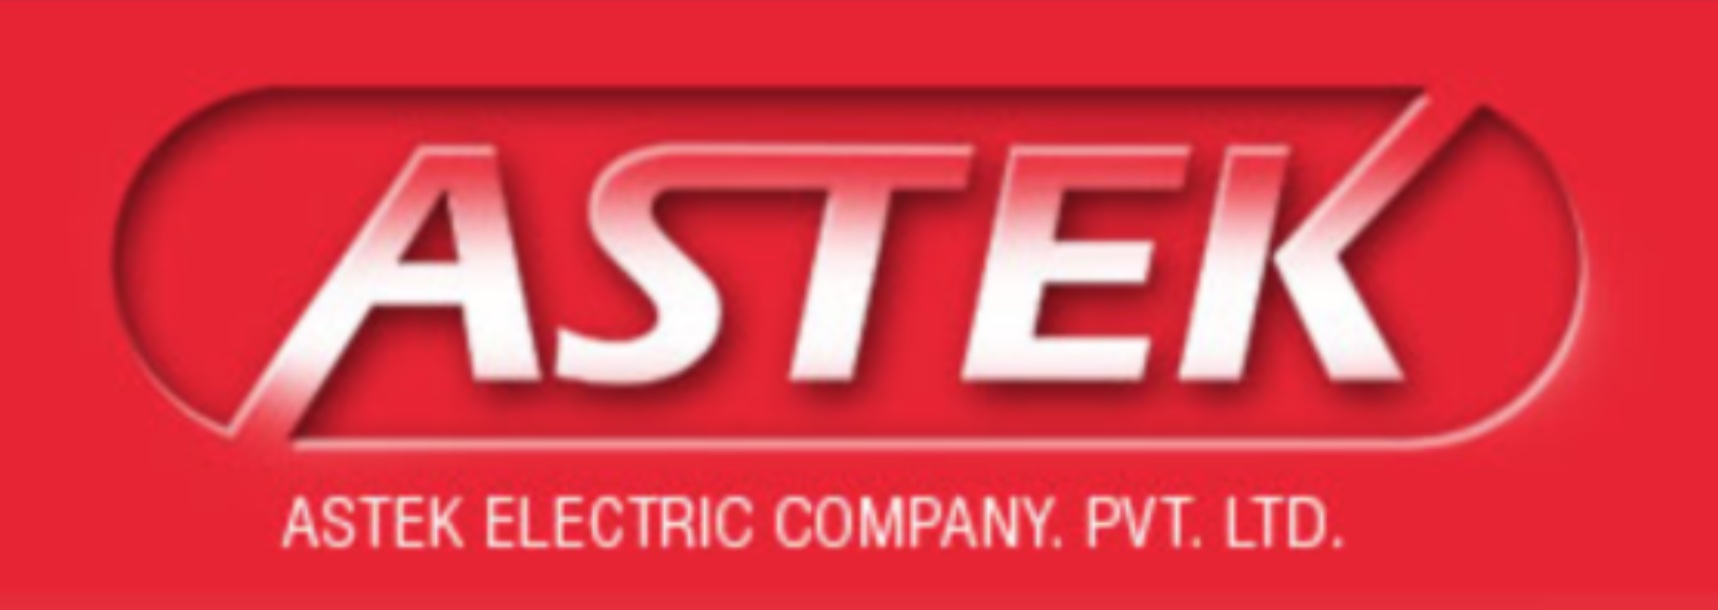 Astek Electric Company Pvt Ltd